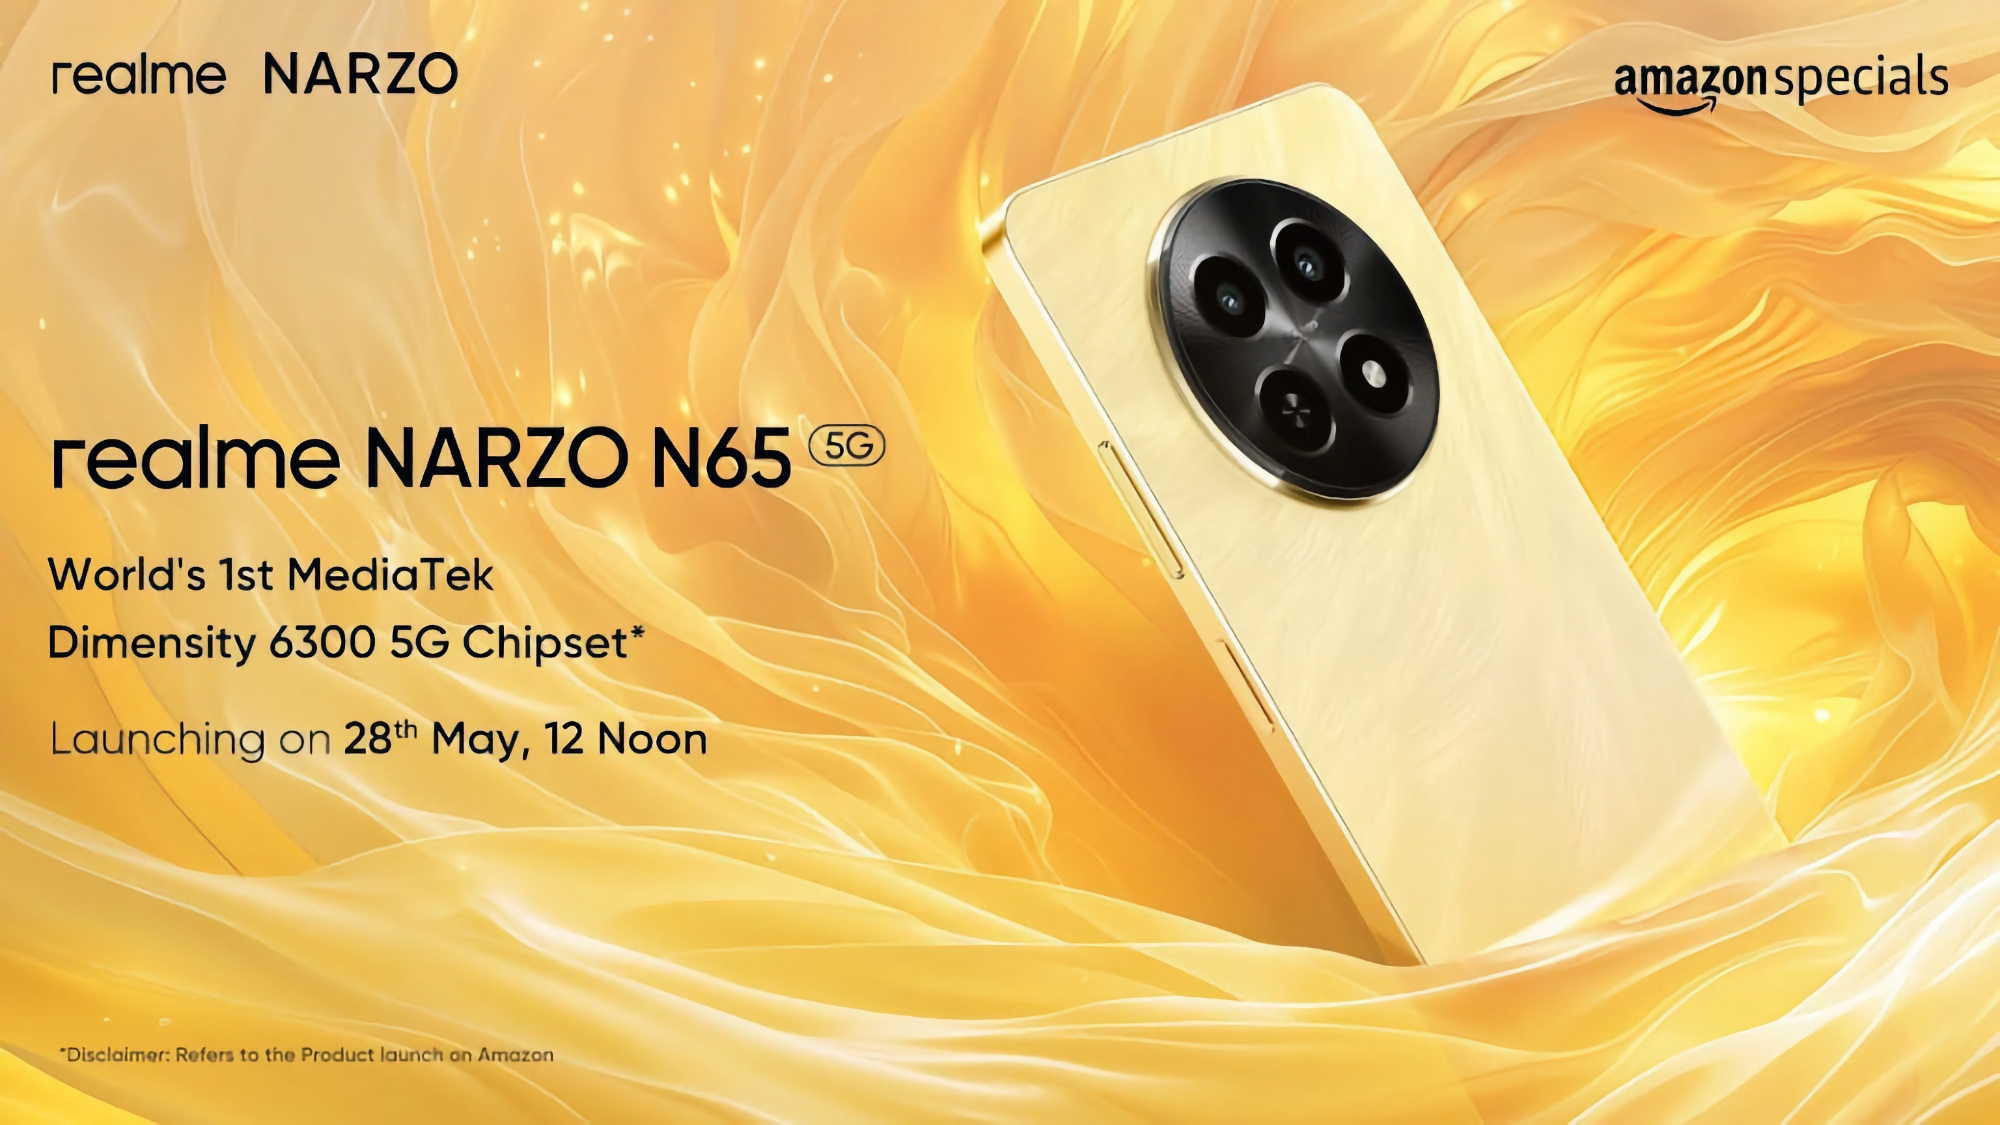 realme afslører Narzo N65 5G budget-smartphone med MediaTek Dimensity 6300-processor om bord den 28. maj